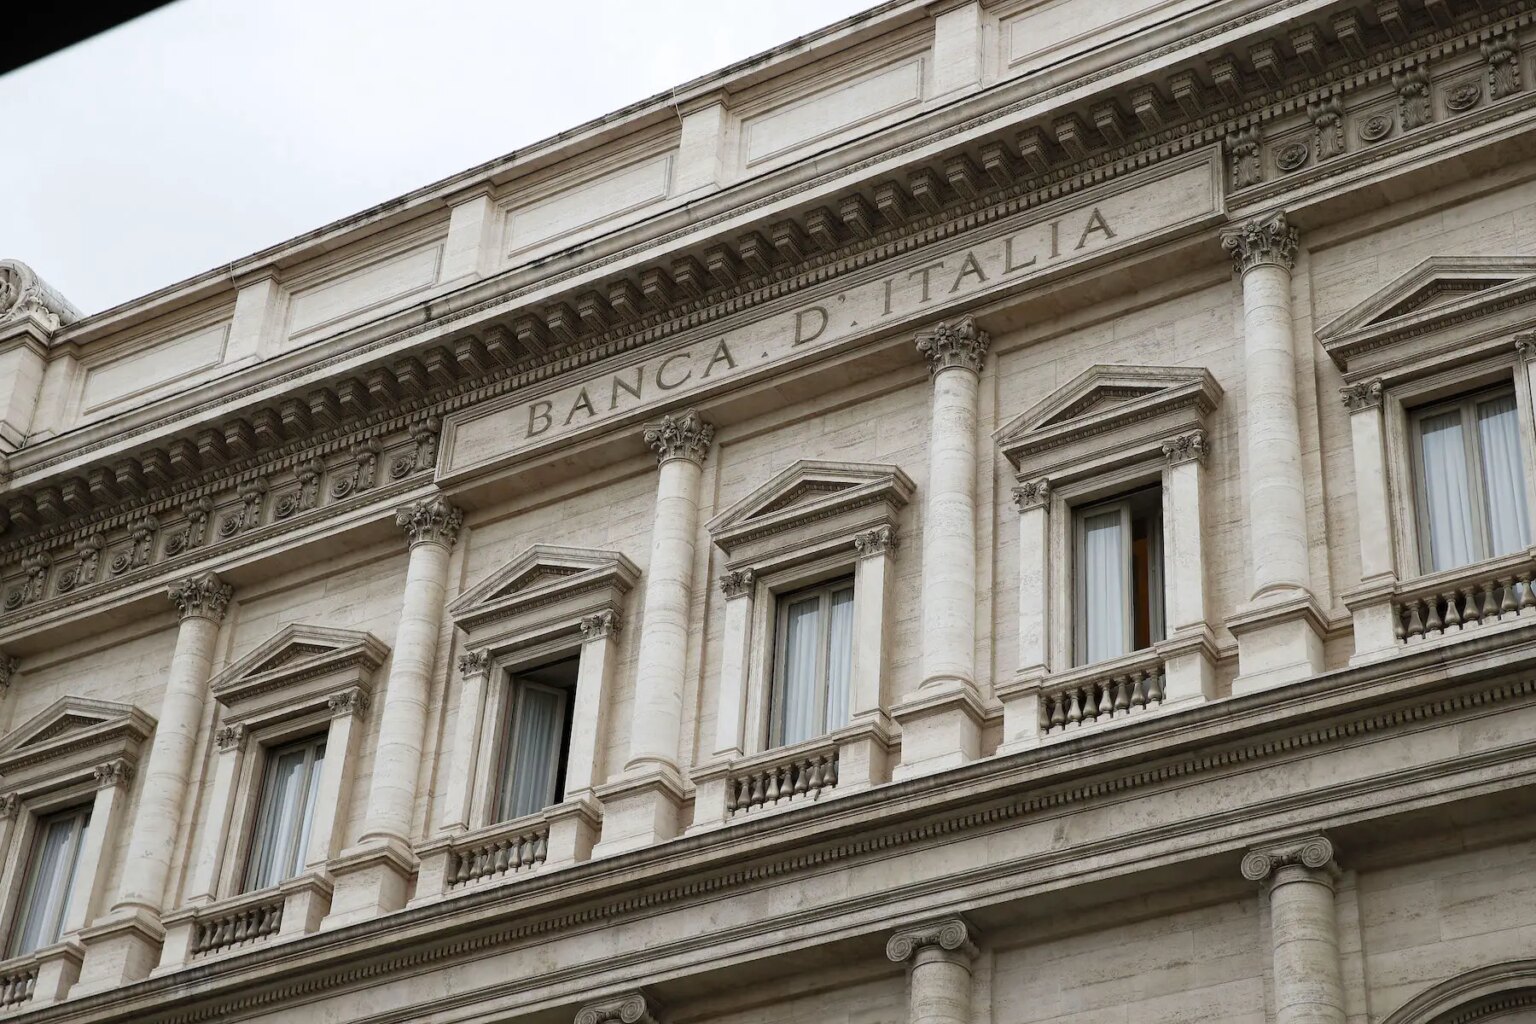 Italian banks